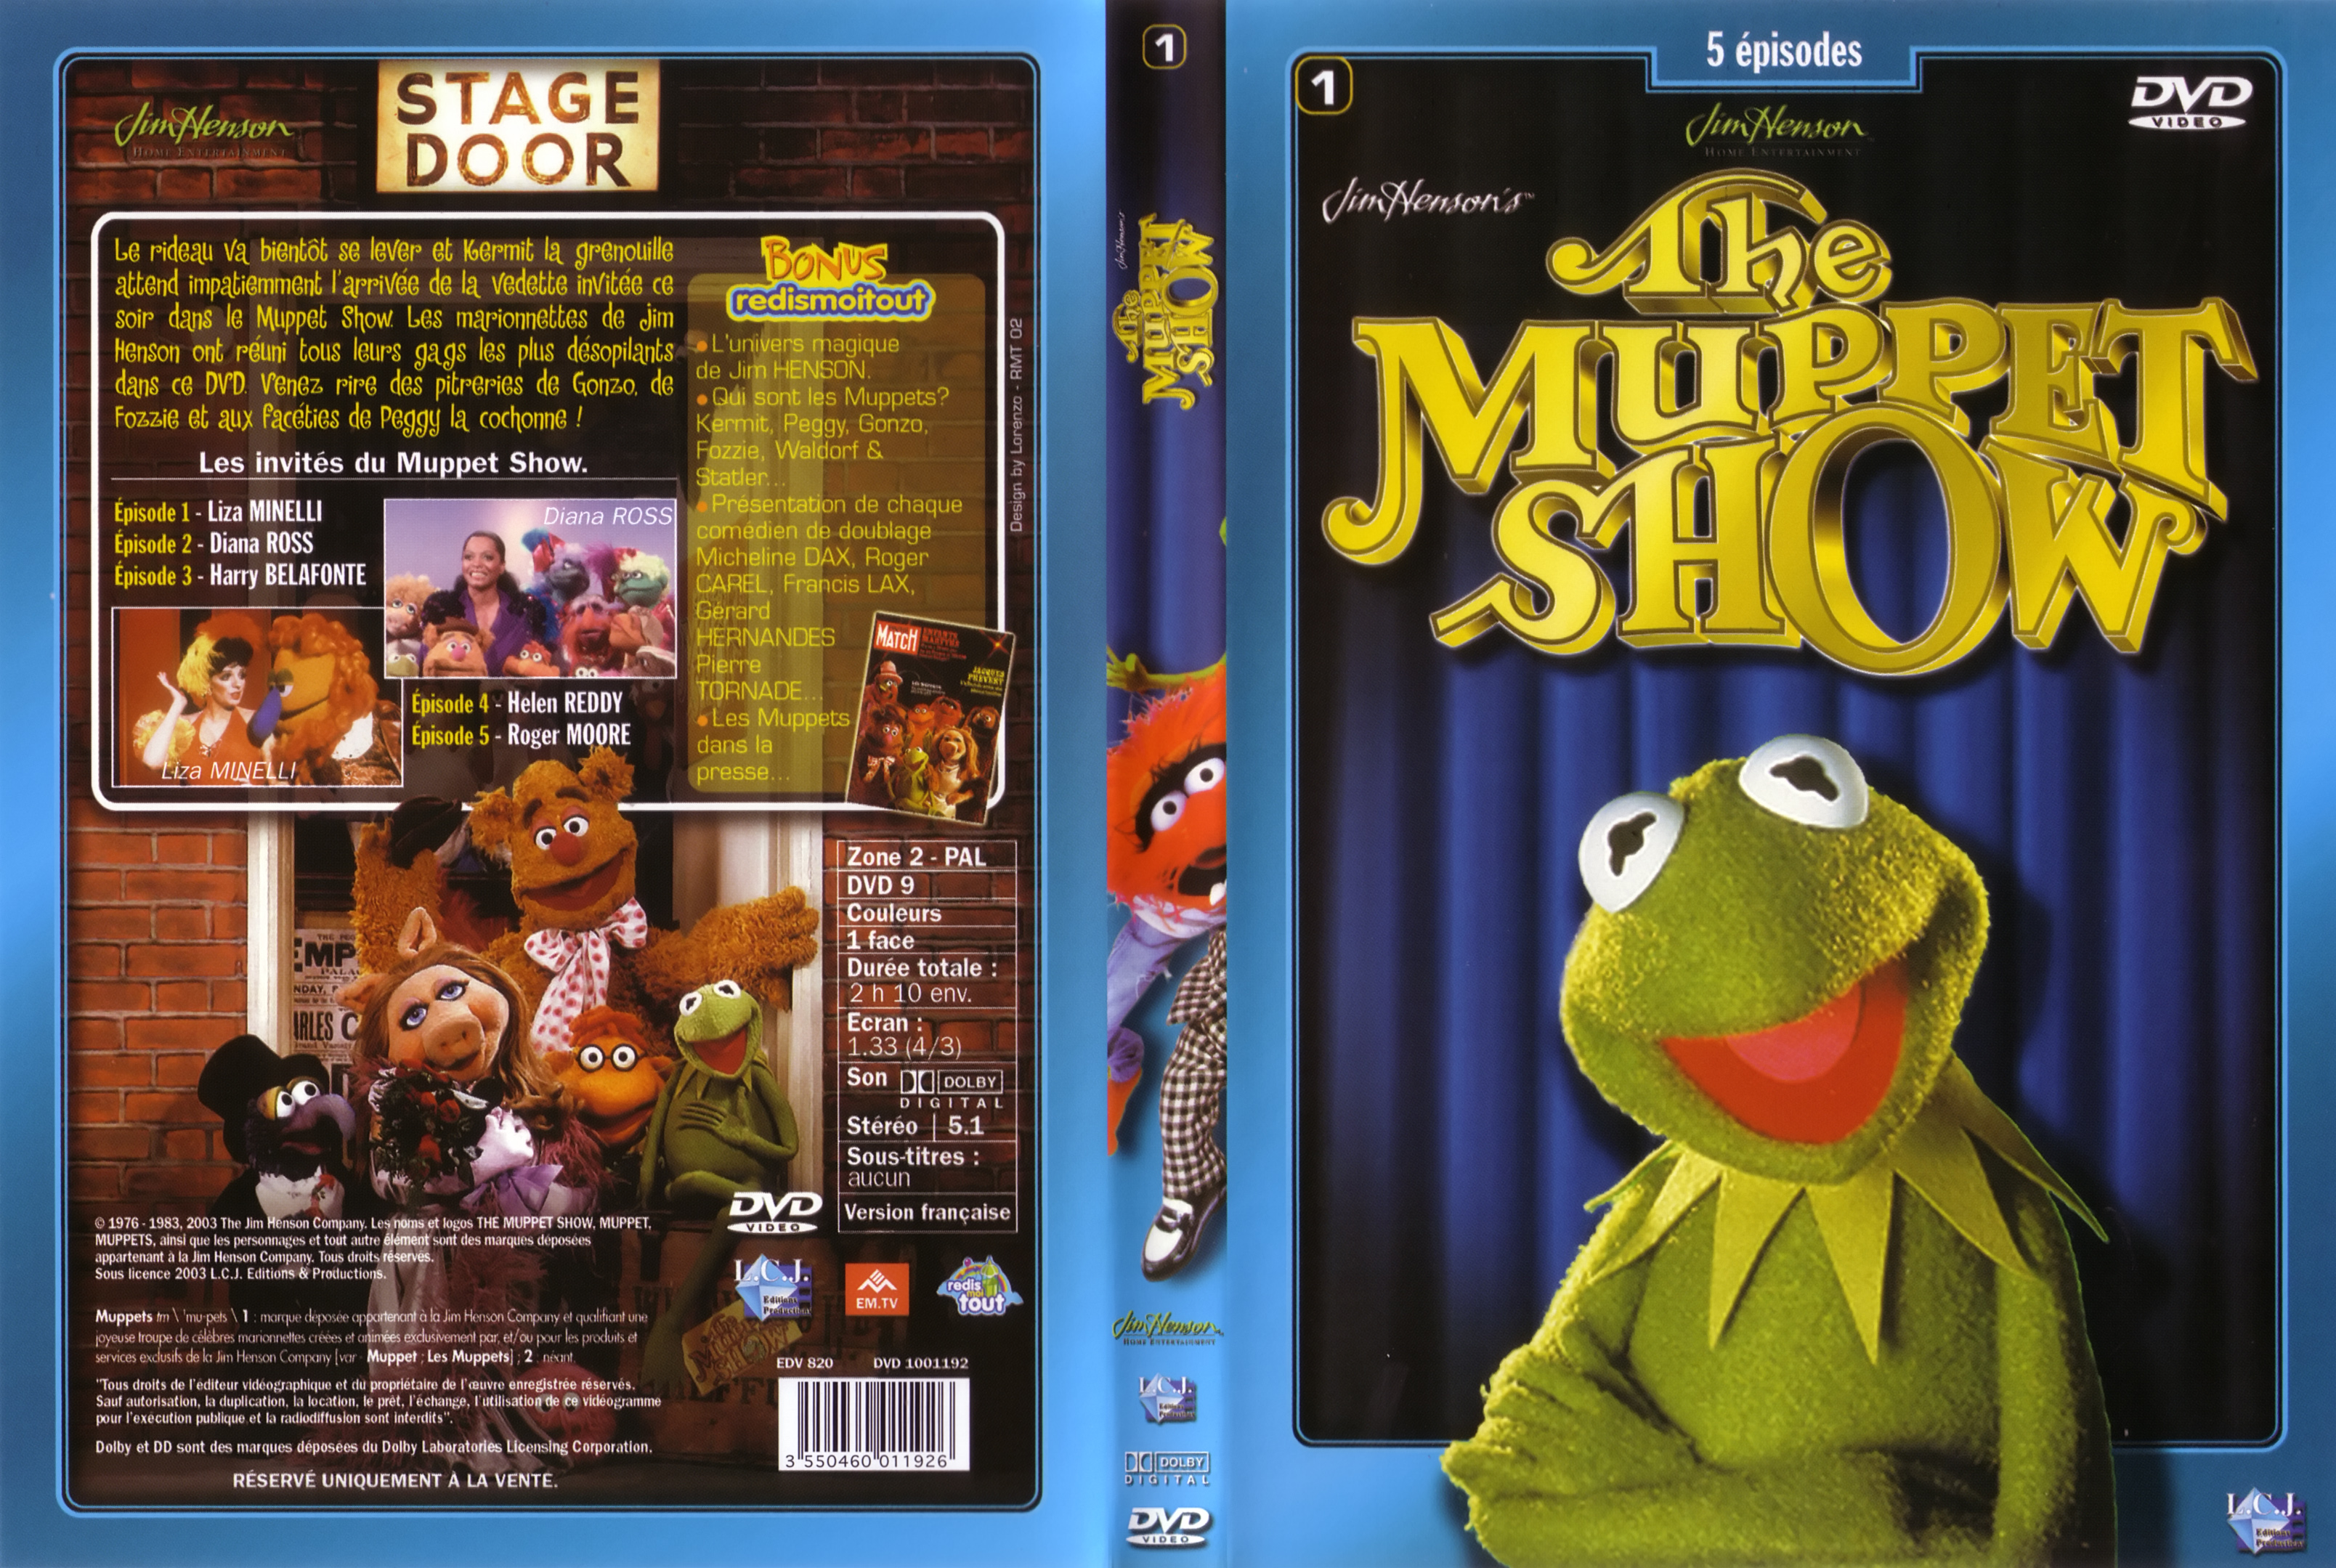 Jaquette DVD The muppet show vol 2 DVD 1